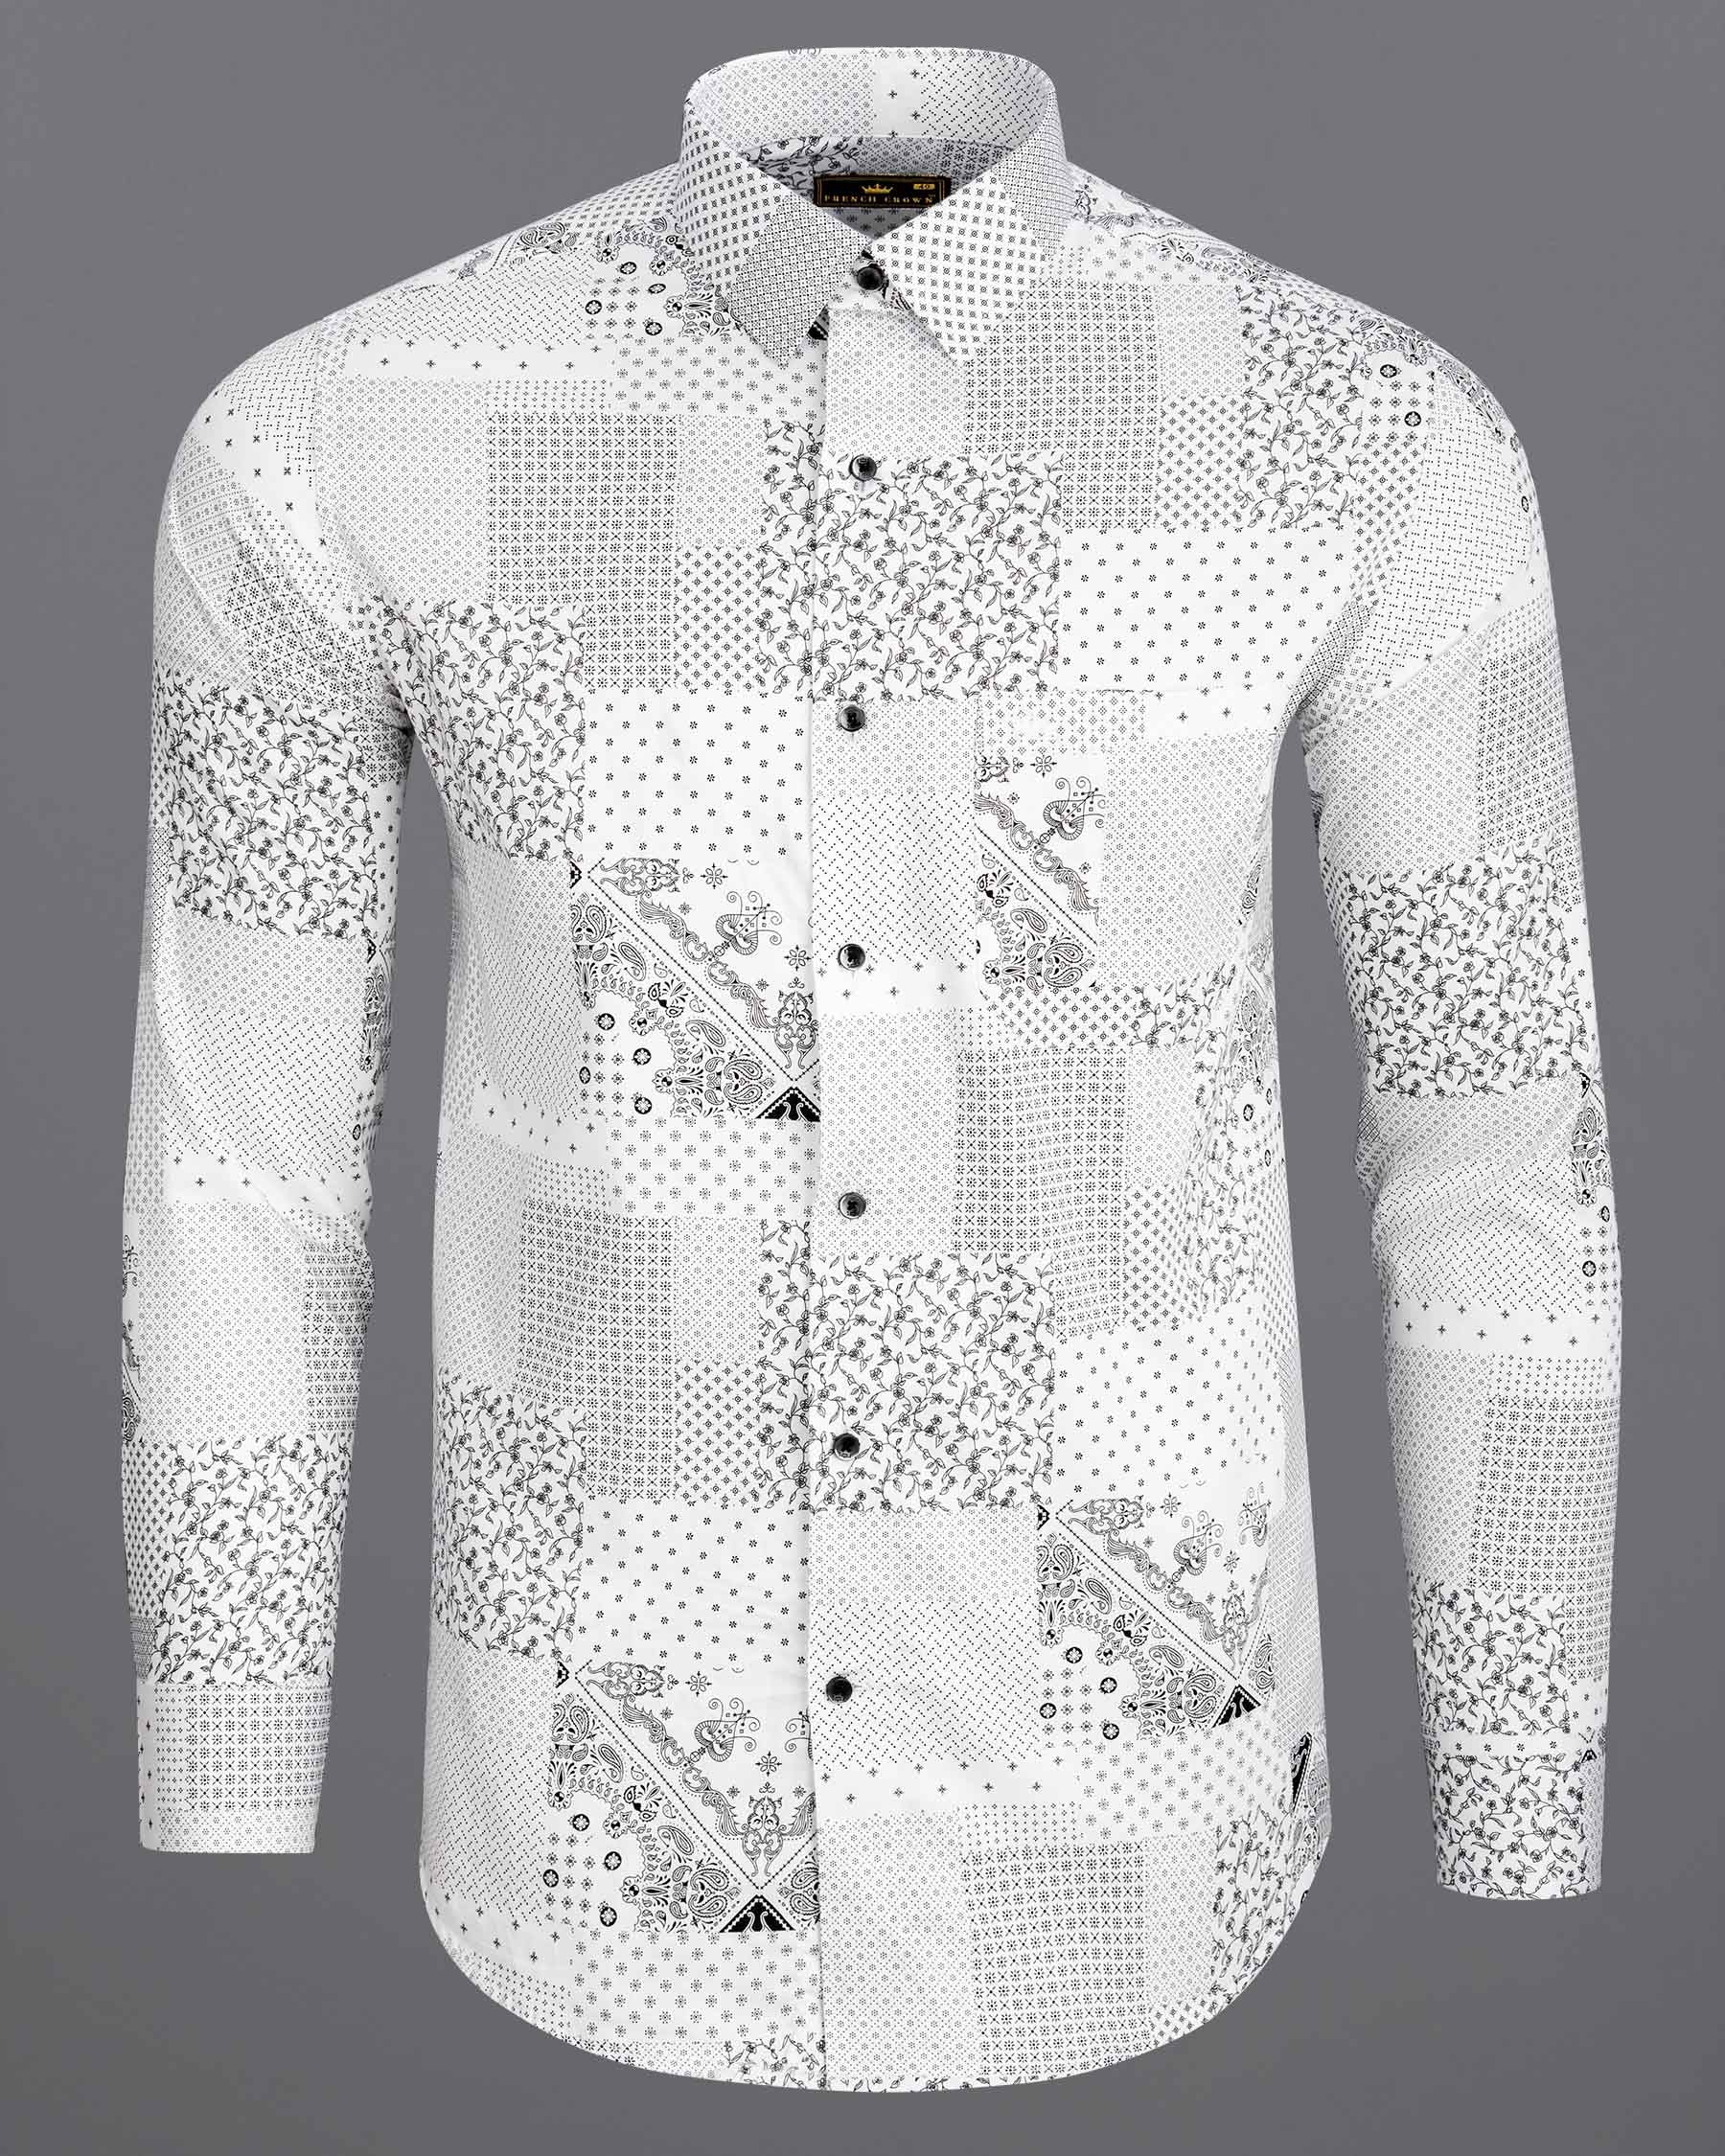 Bright White Square Shaped Paisleys and Flowers Printed Super Soft Premium Cotton Shirt